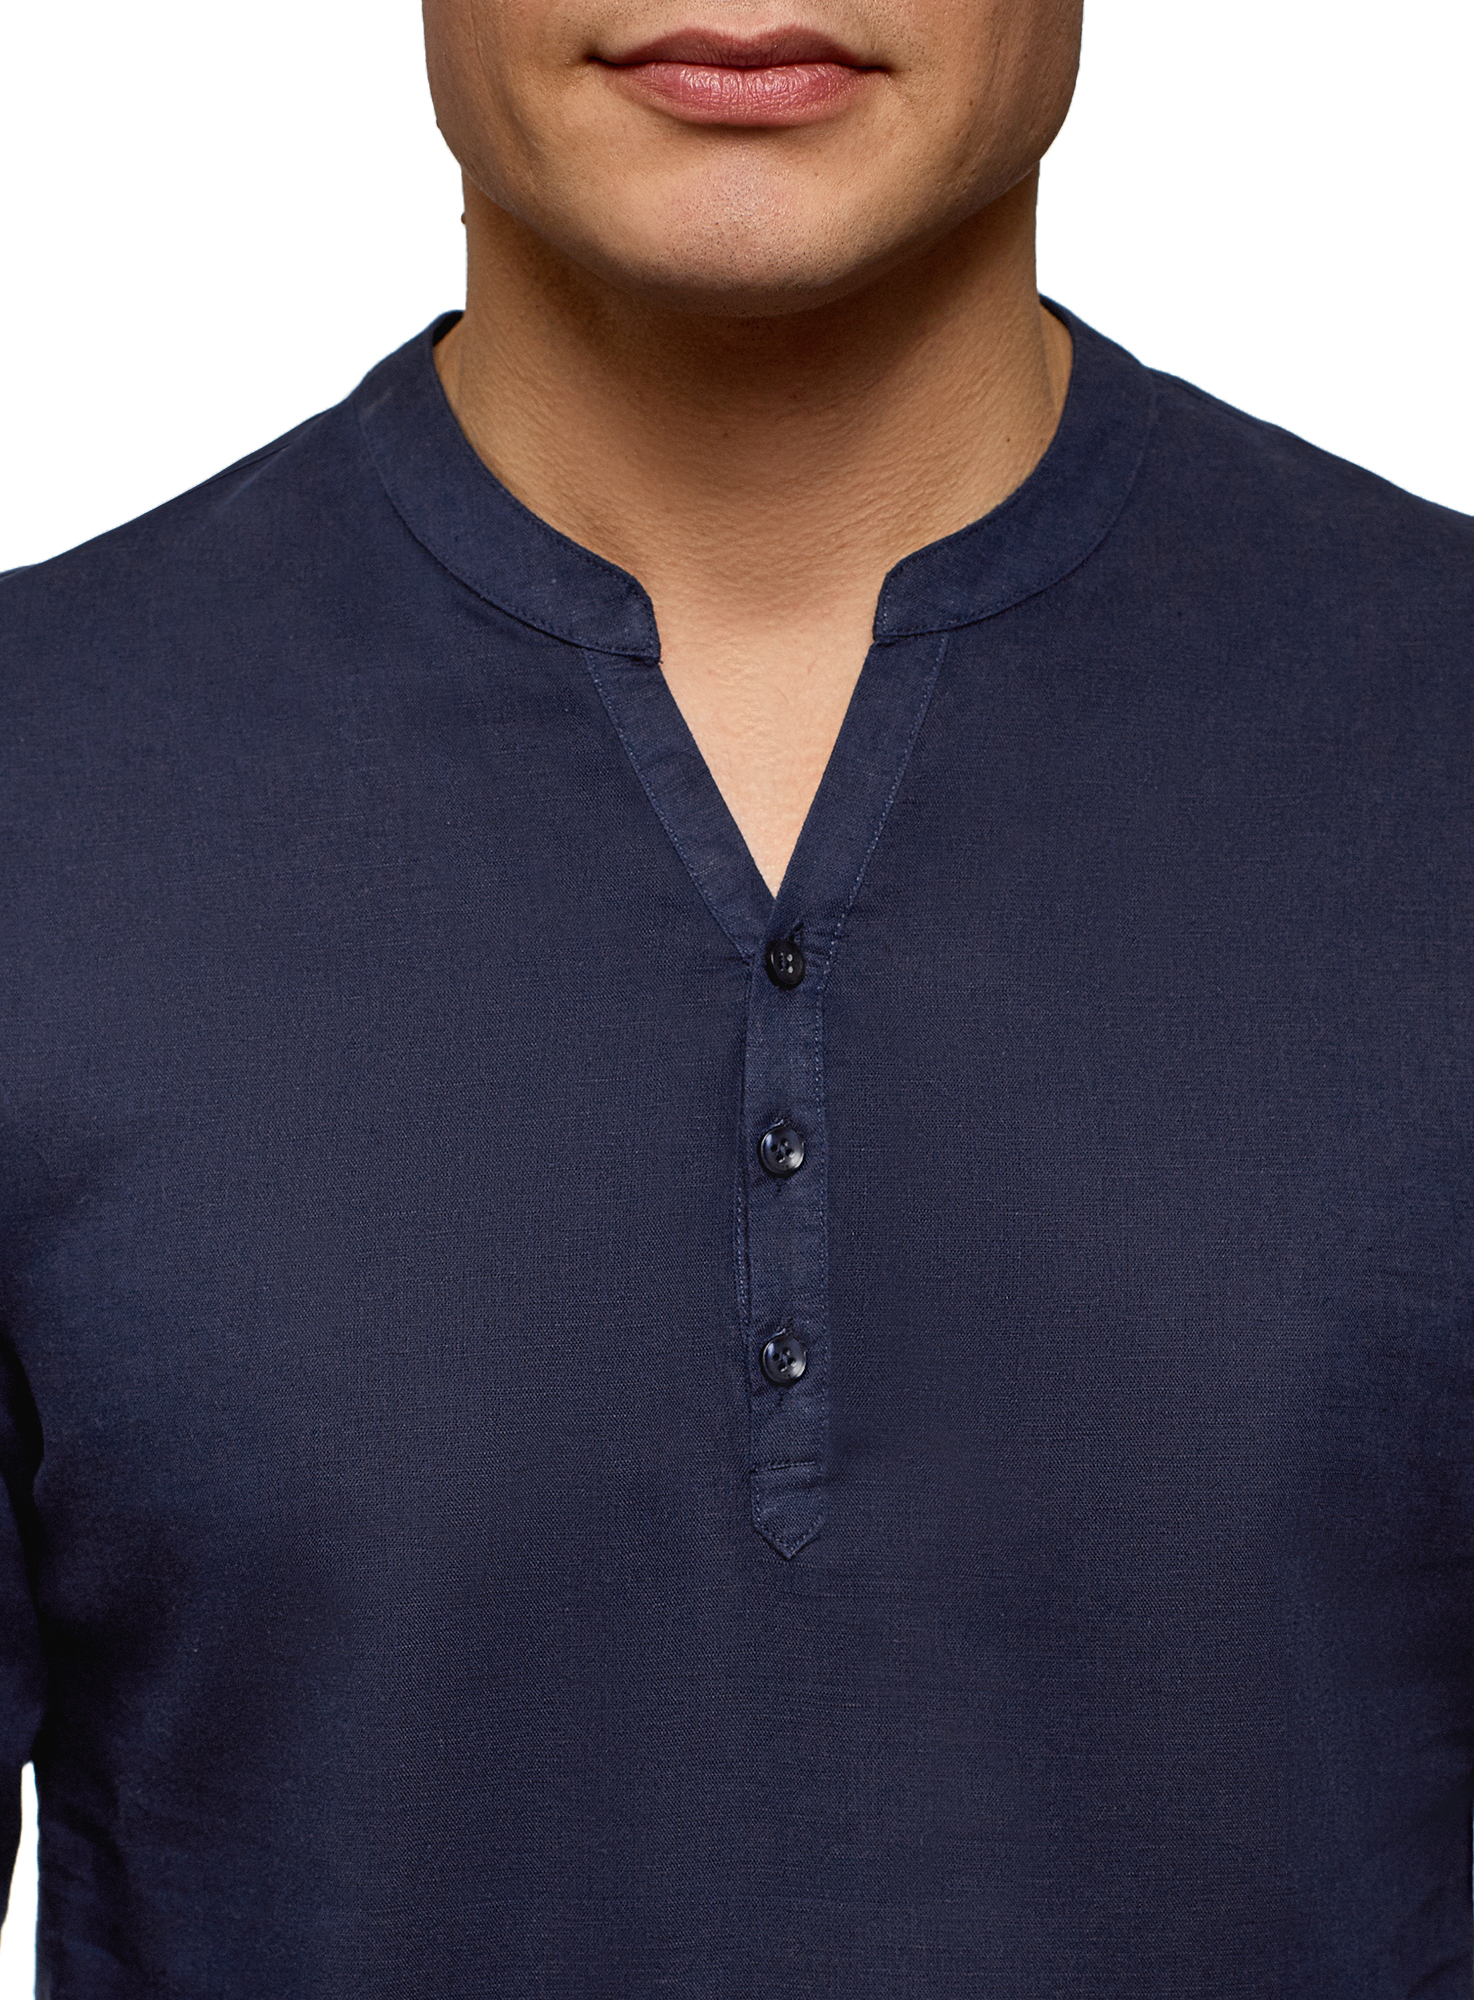 Рубашка мужская oodji 3B320002M-1 синяя M